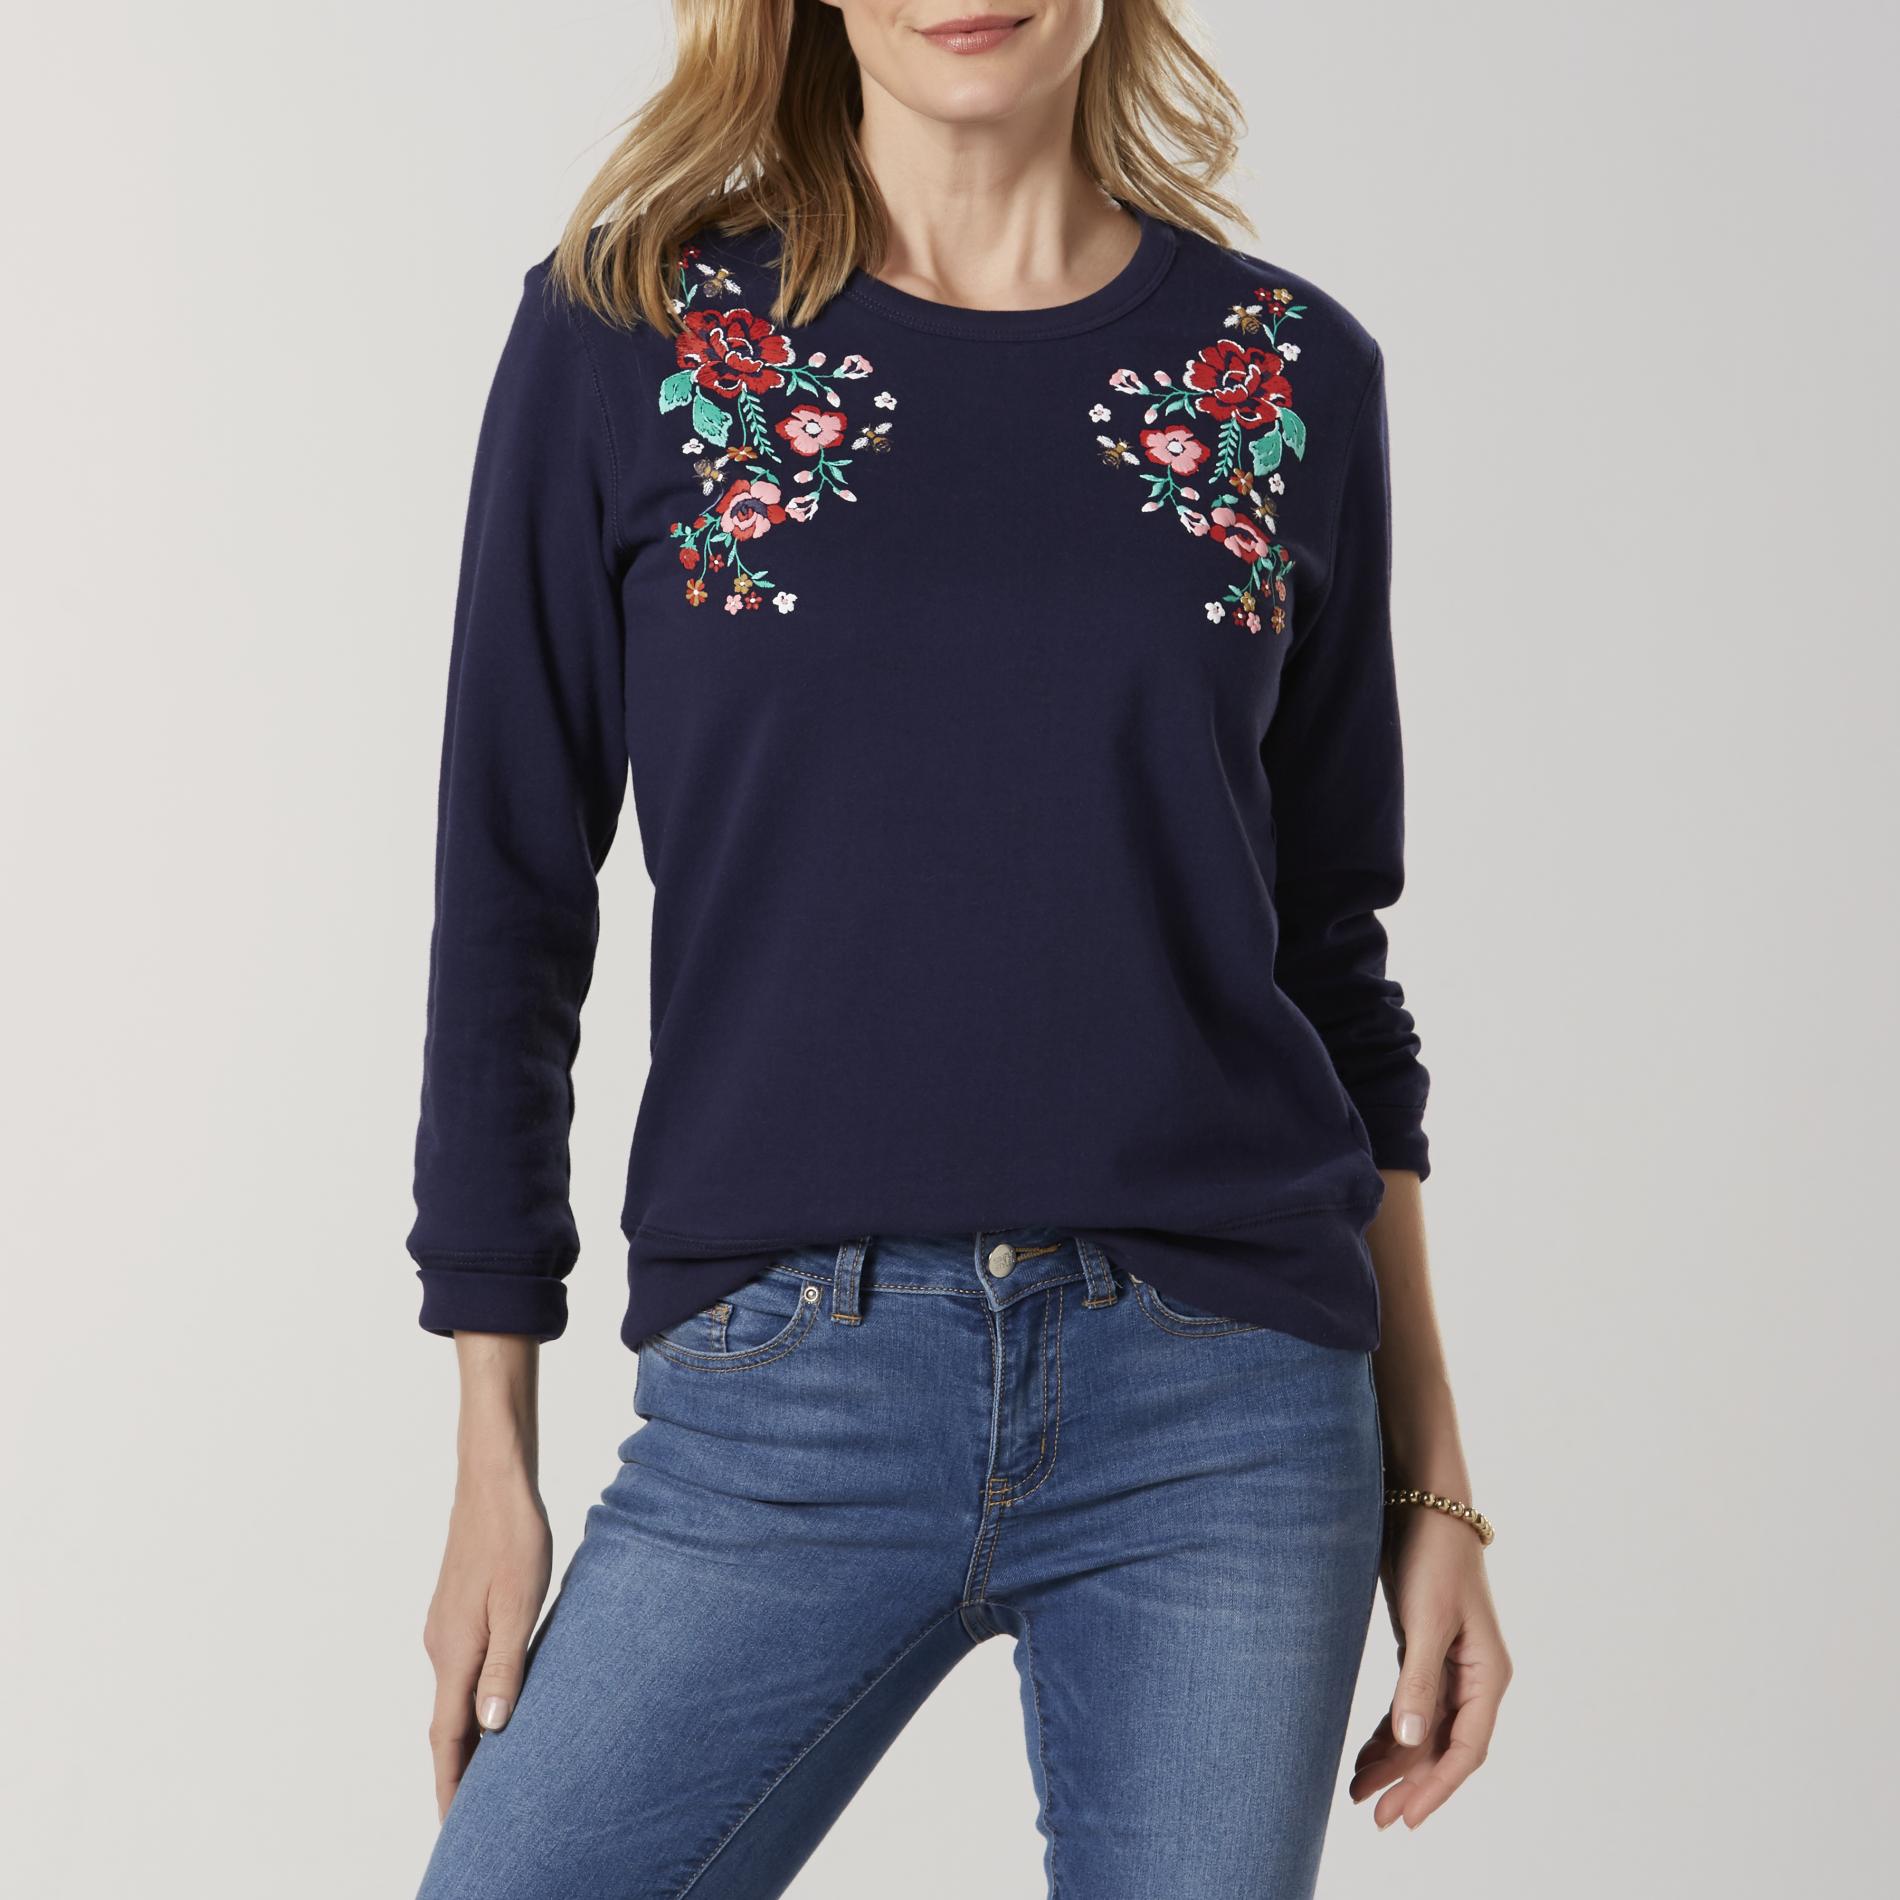 Basic Editions Women's Sweatshirt - Floral